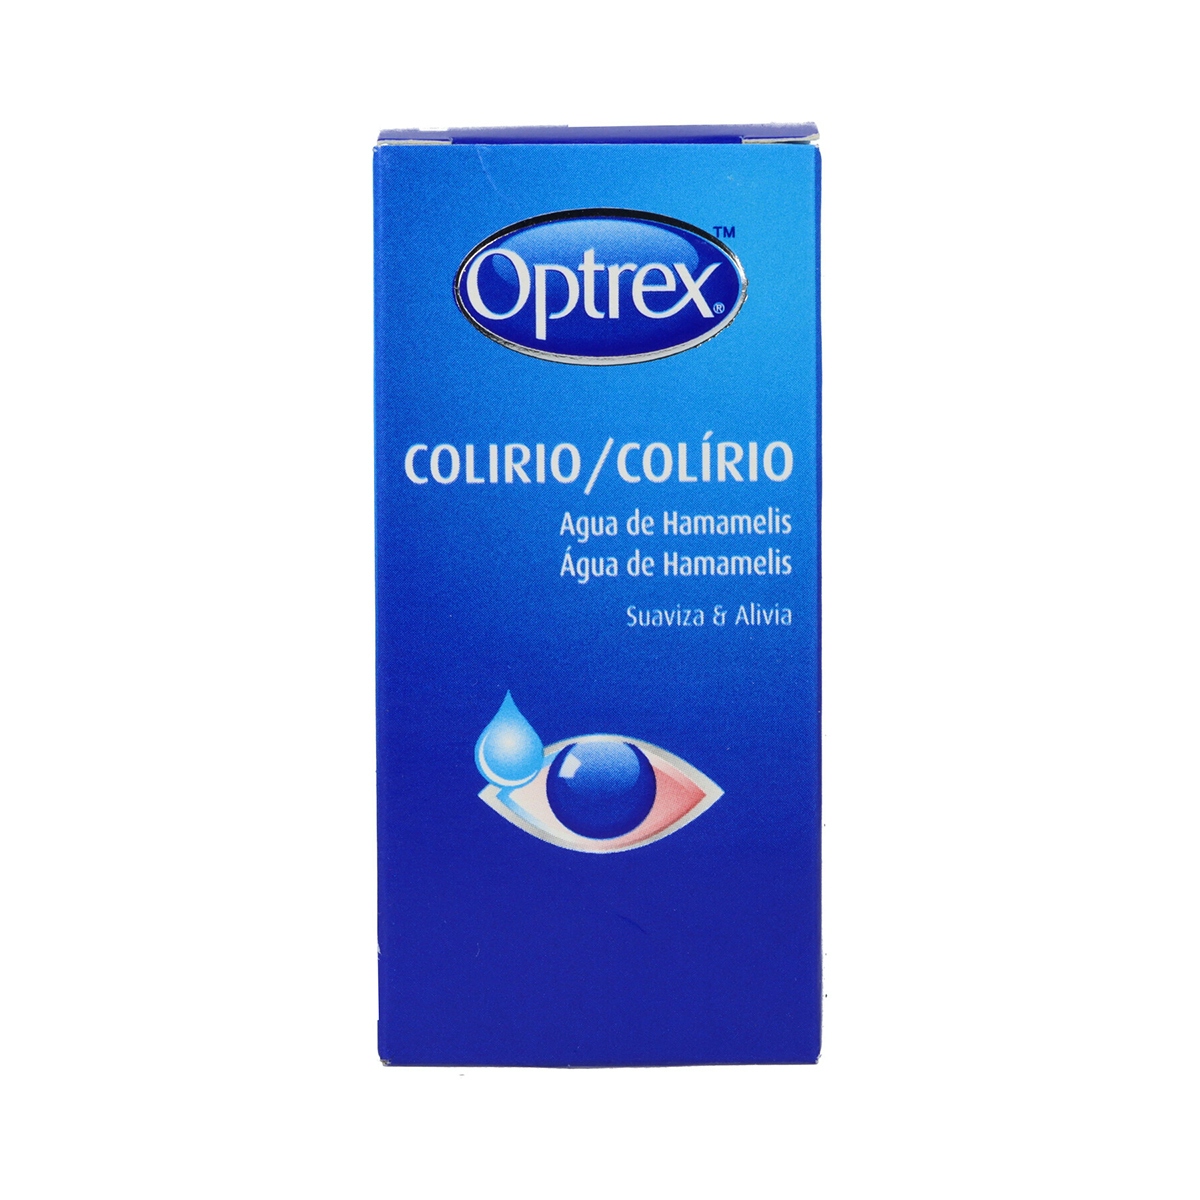 Colirio agua OPTREX 1 ud